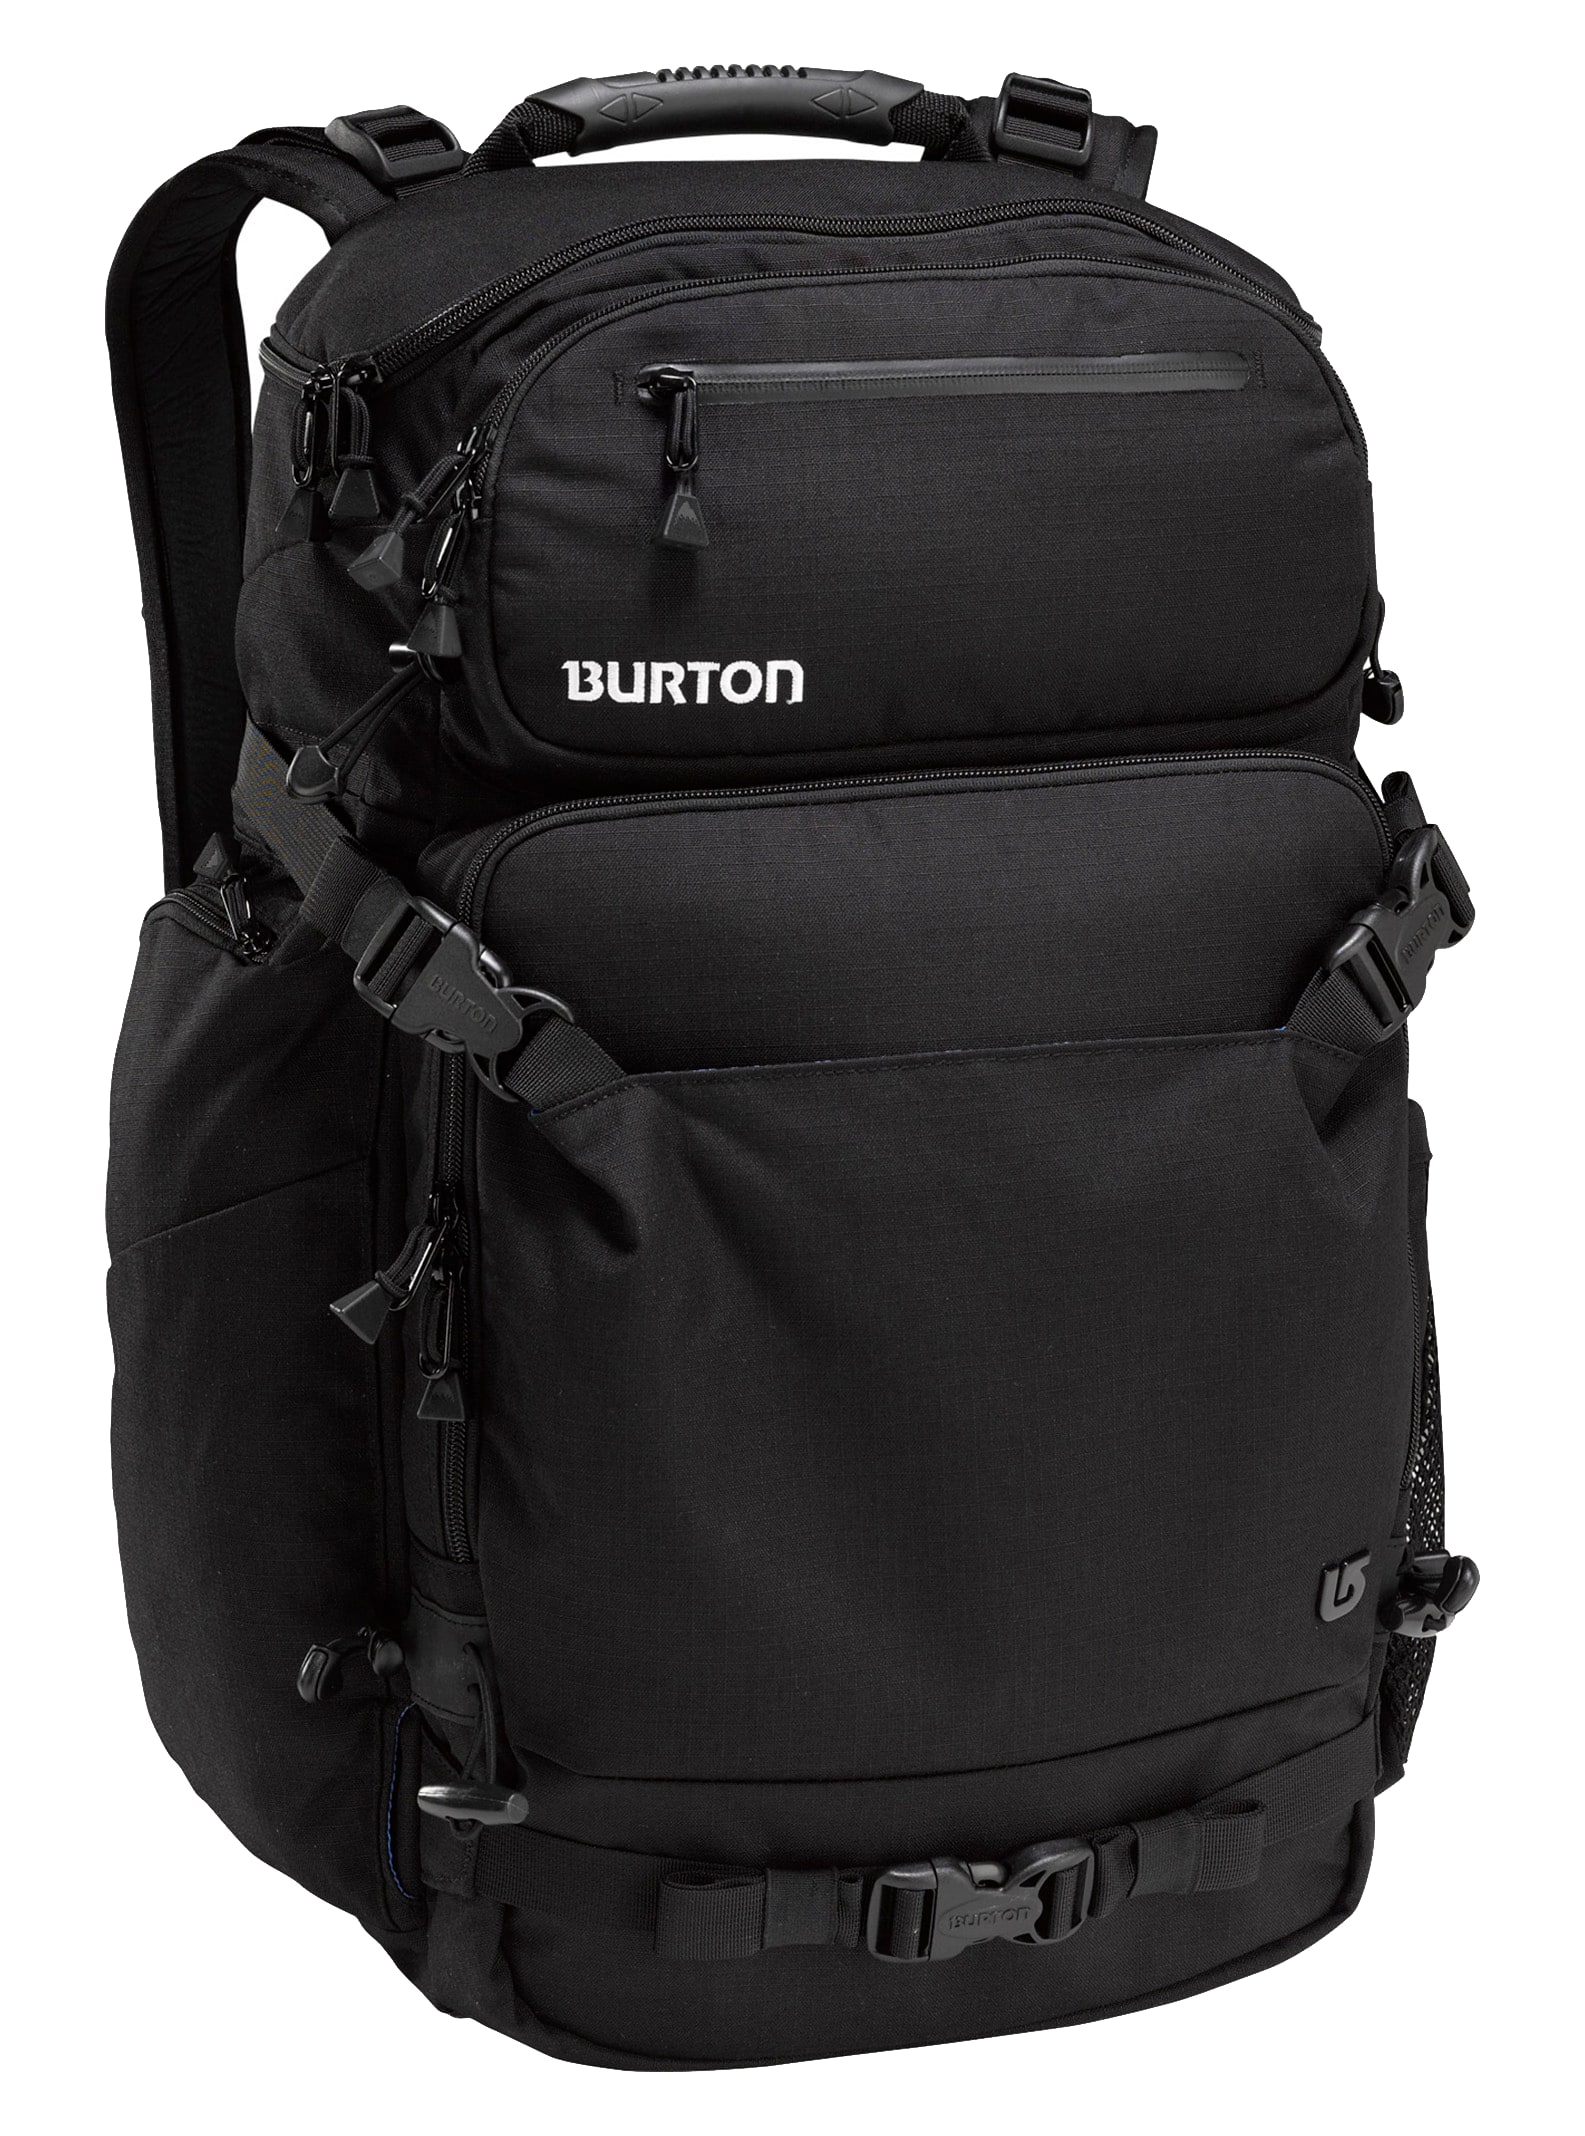 Burton / Focus 30L Camera Backpack